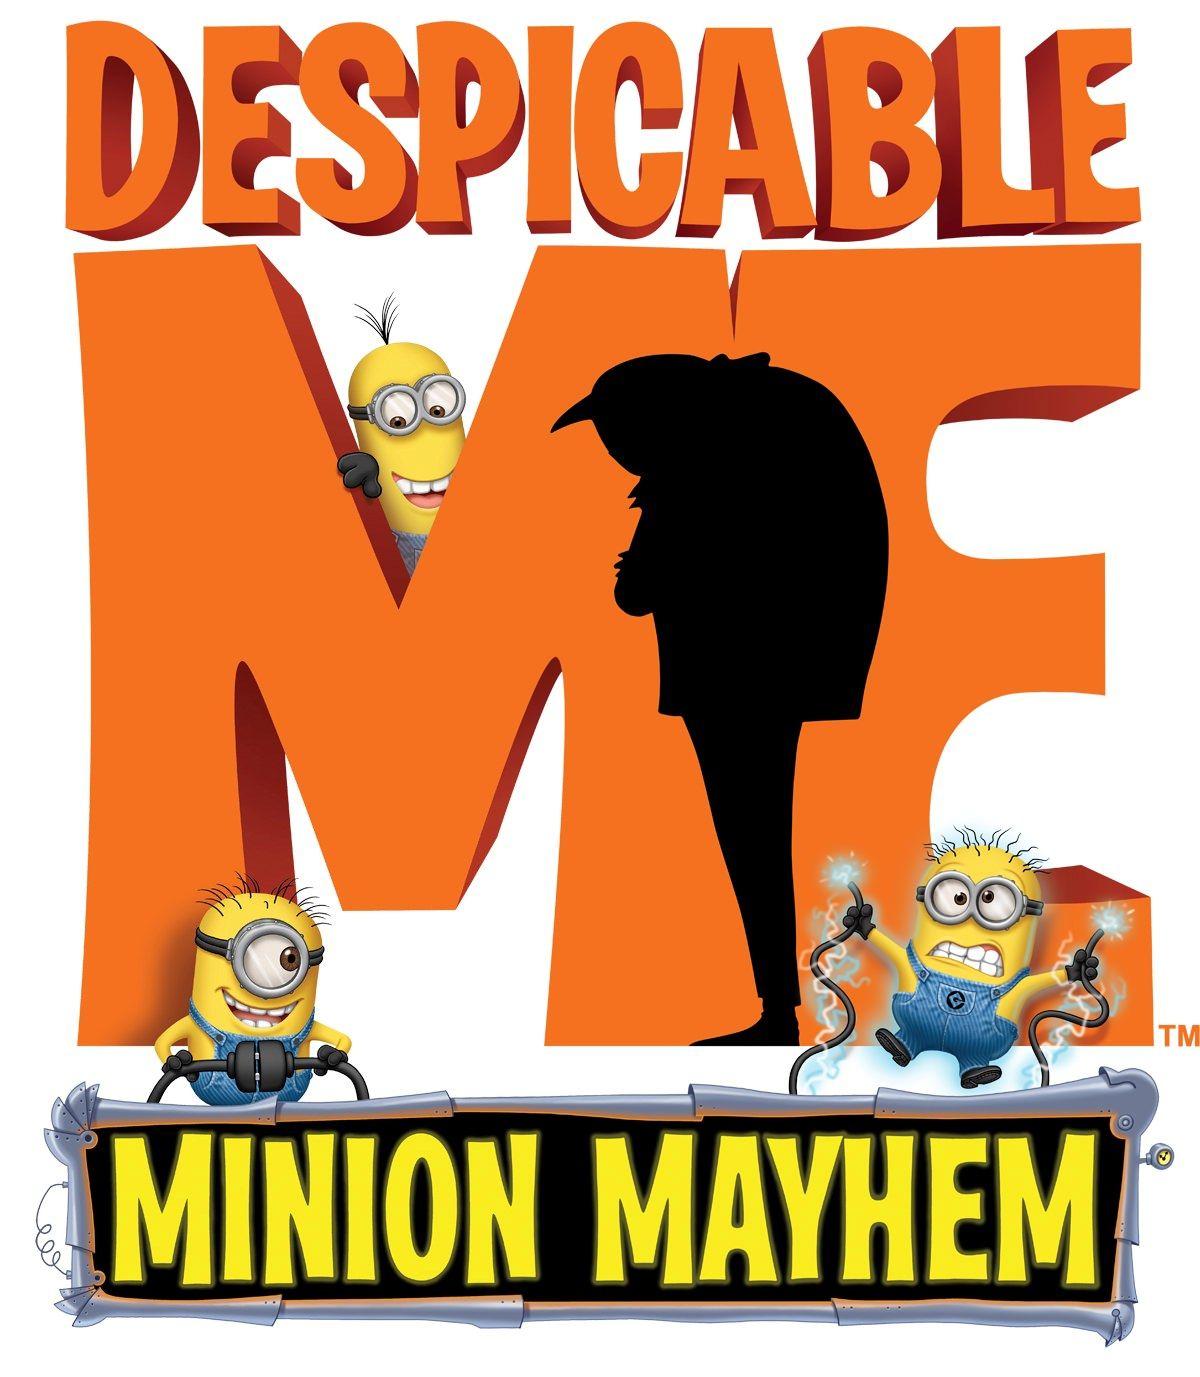 Despicable Me 1 Logo - Despicable Me: Minion Mayhem. Universal Animation Fan